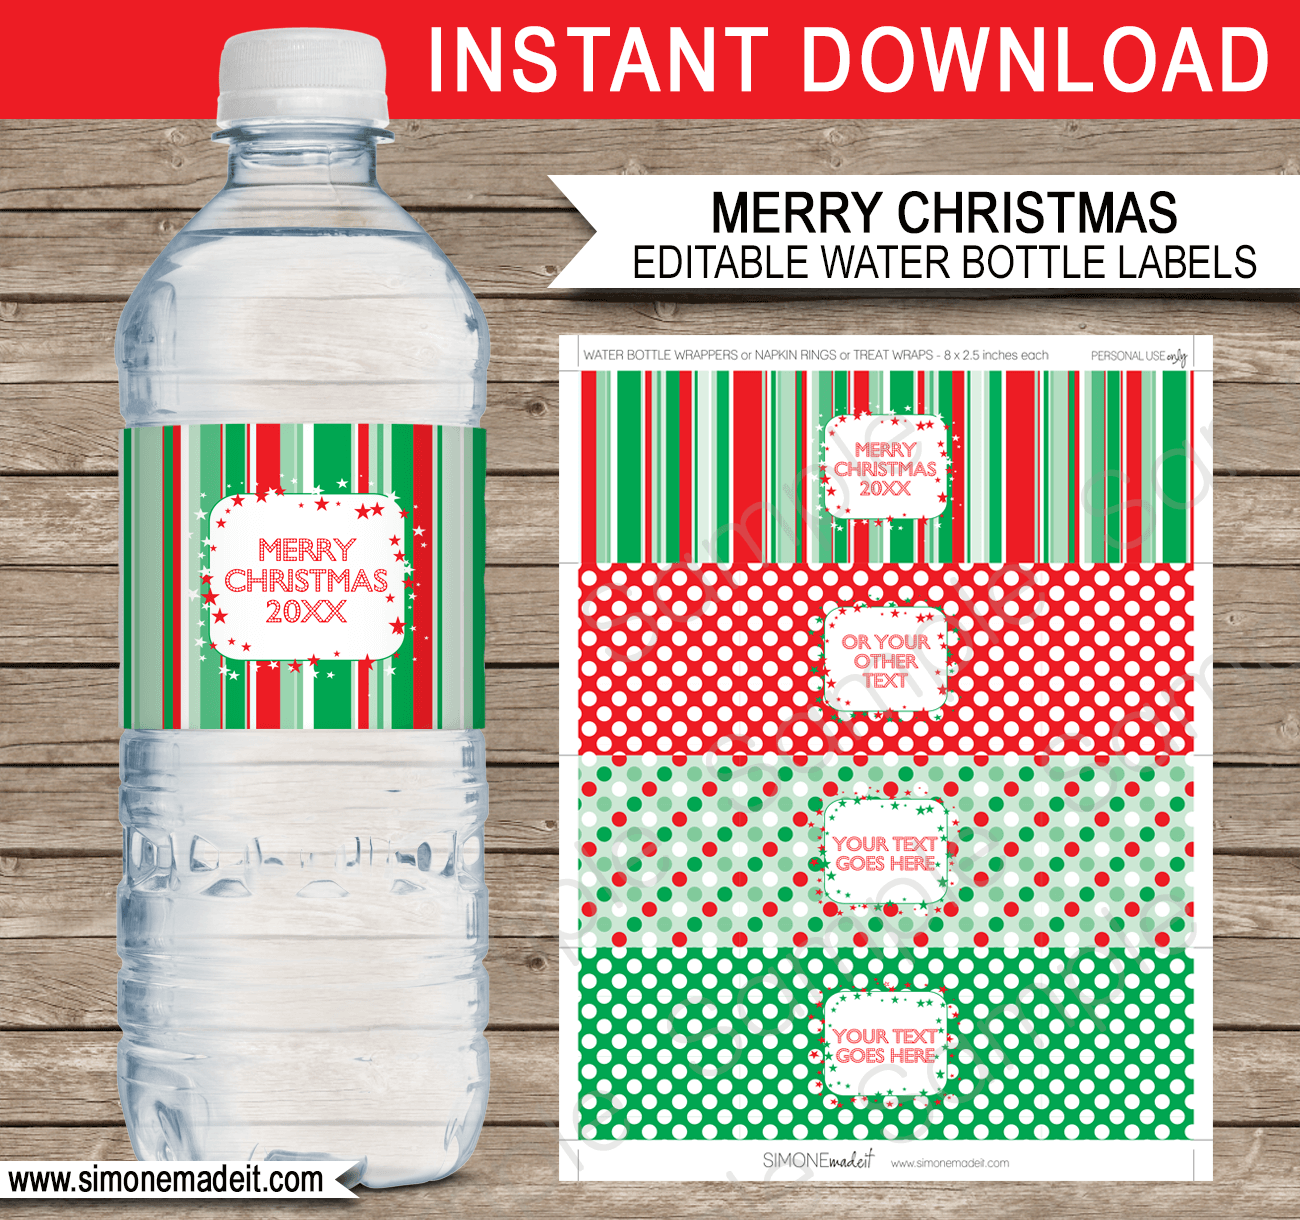 Printable Christmas Water Bottle Labels template | Napkin Wraps | Treat Wraps | DIY Editable Template | INSTANT DOWNLOAD via simonemadeit.com